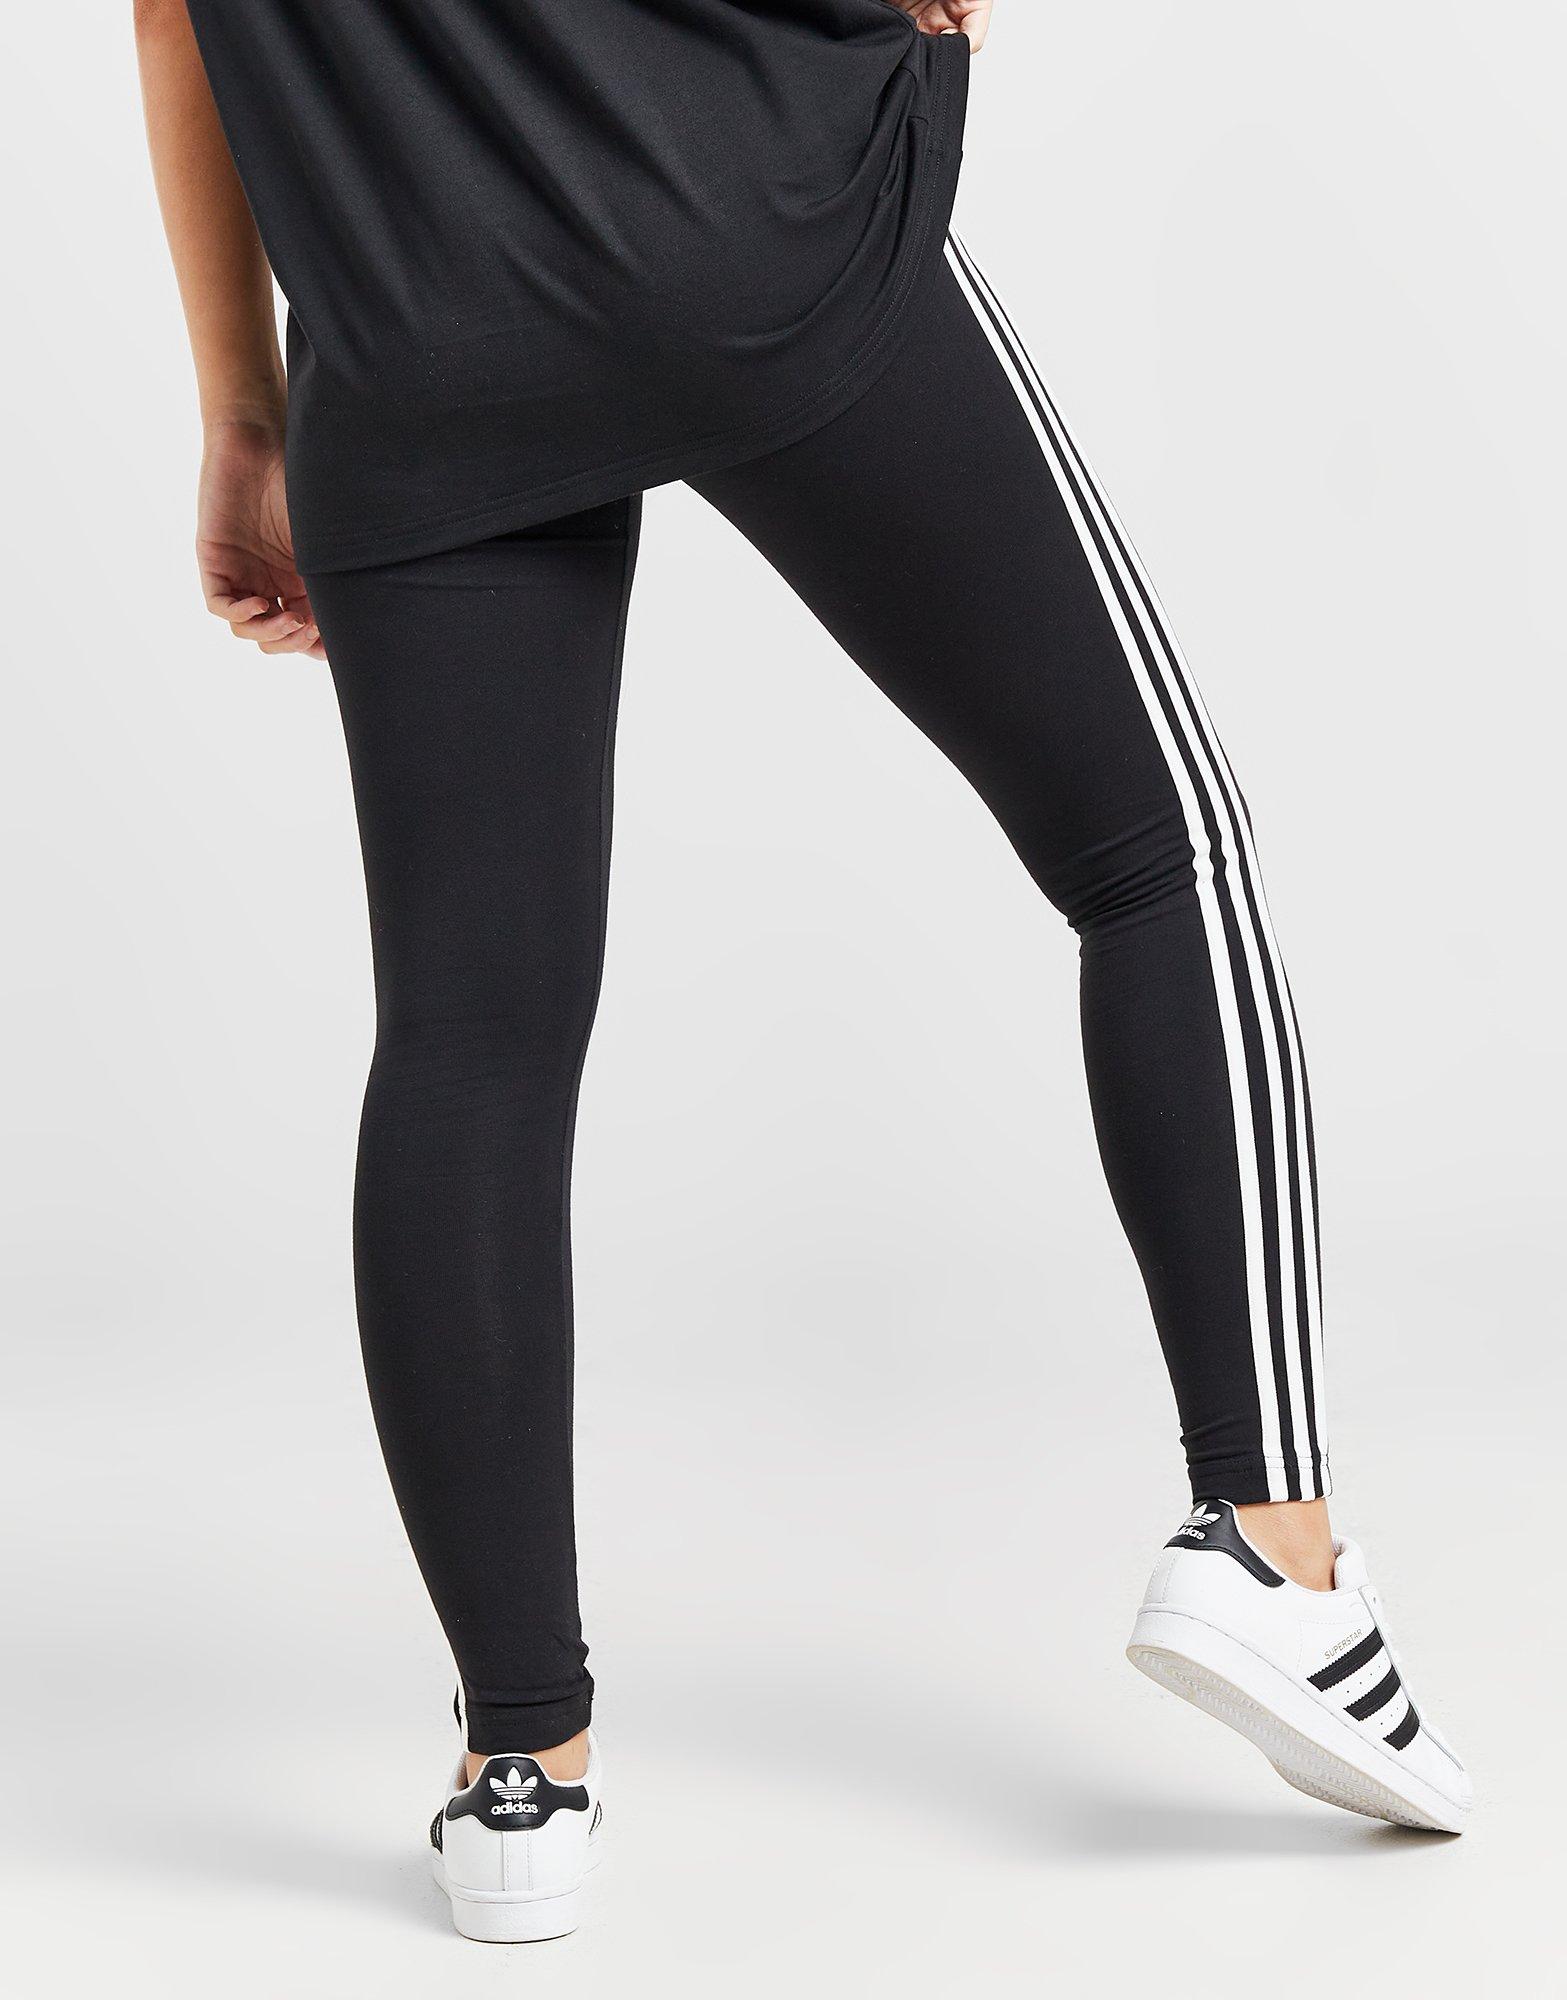 Adidas Womens 3 Stripes Leggings GL0723 Loungewear Extra Slim - S Small